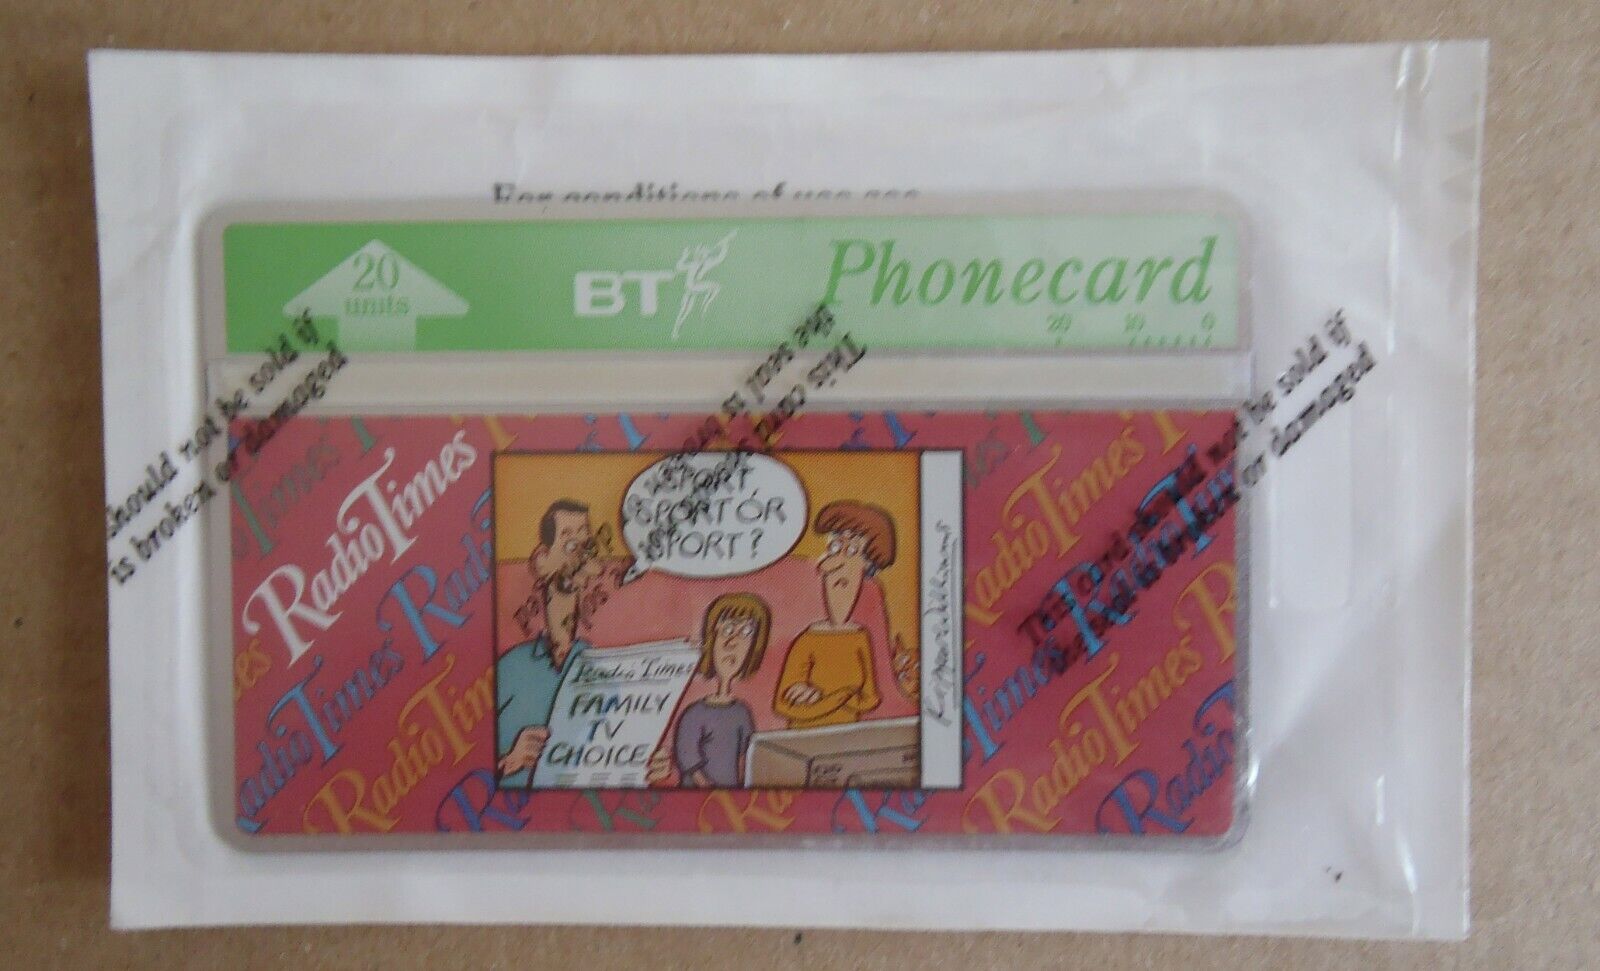 BT Phonecard Radio Times Sport Cartoon 20 Units - Mint Condition